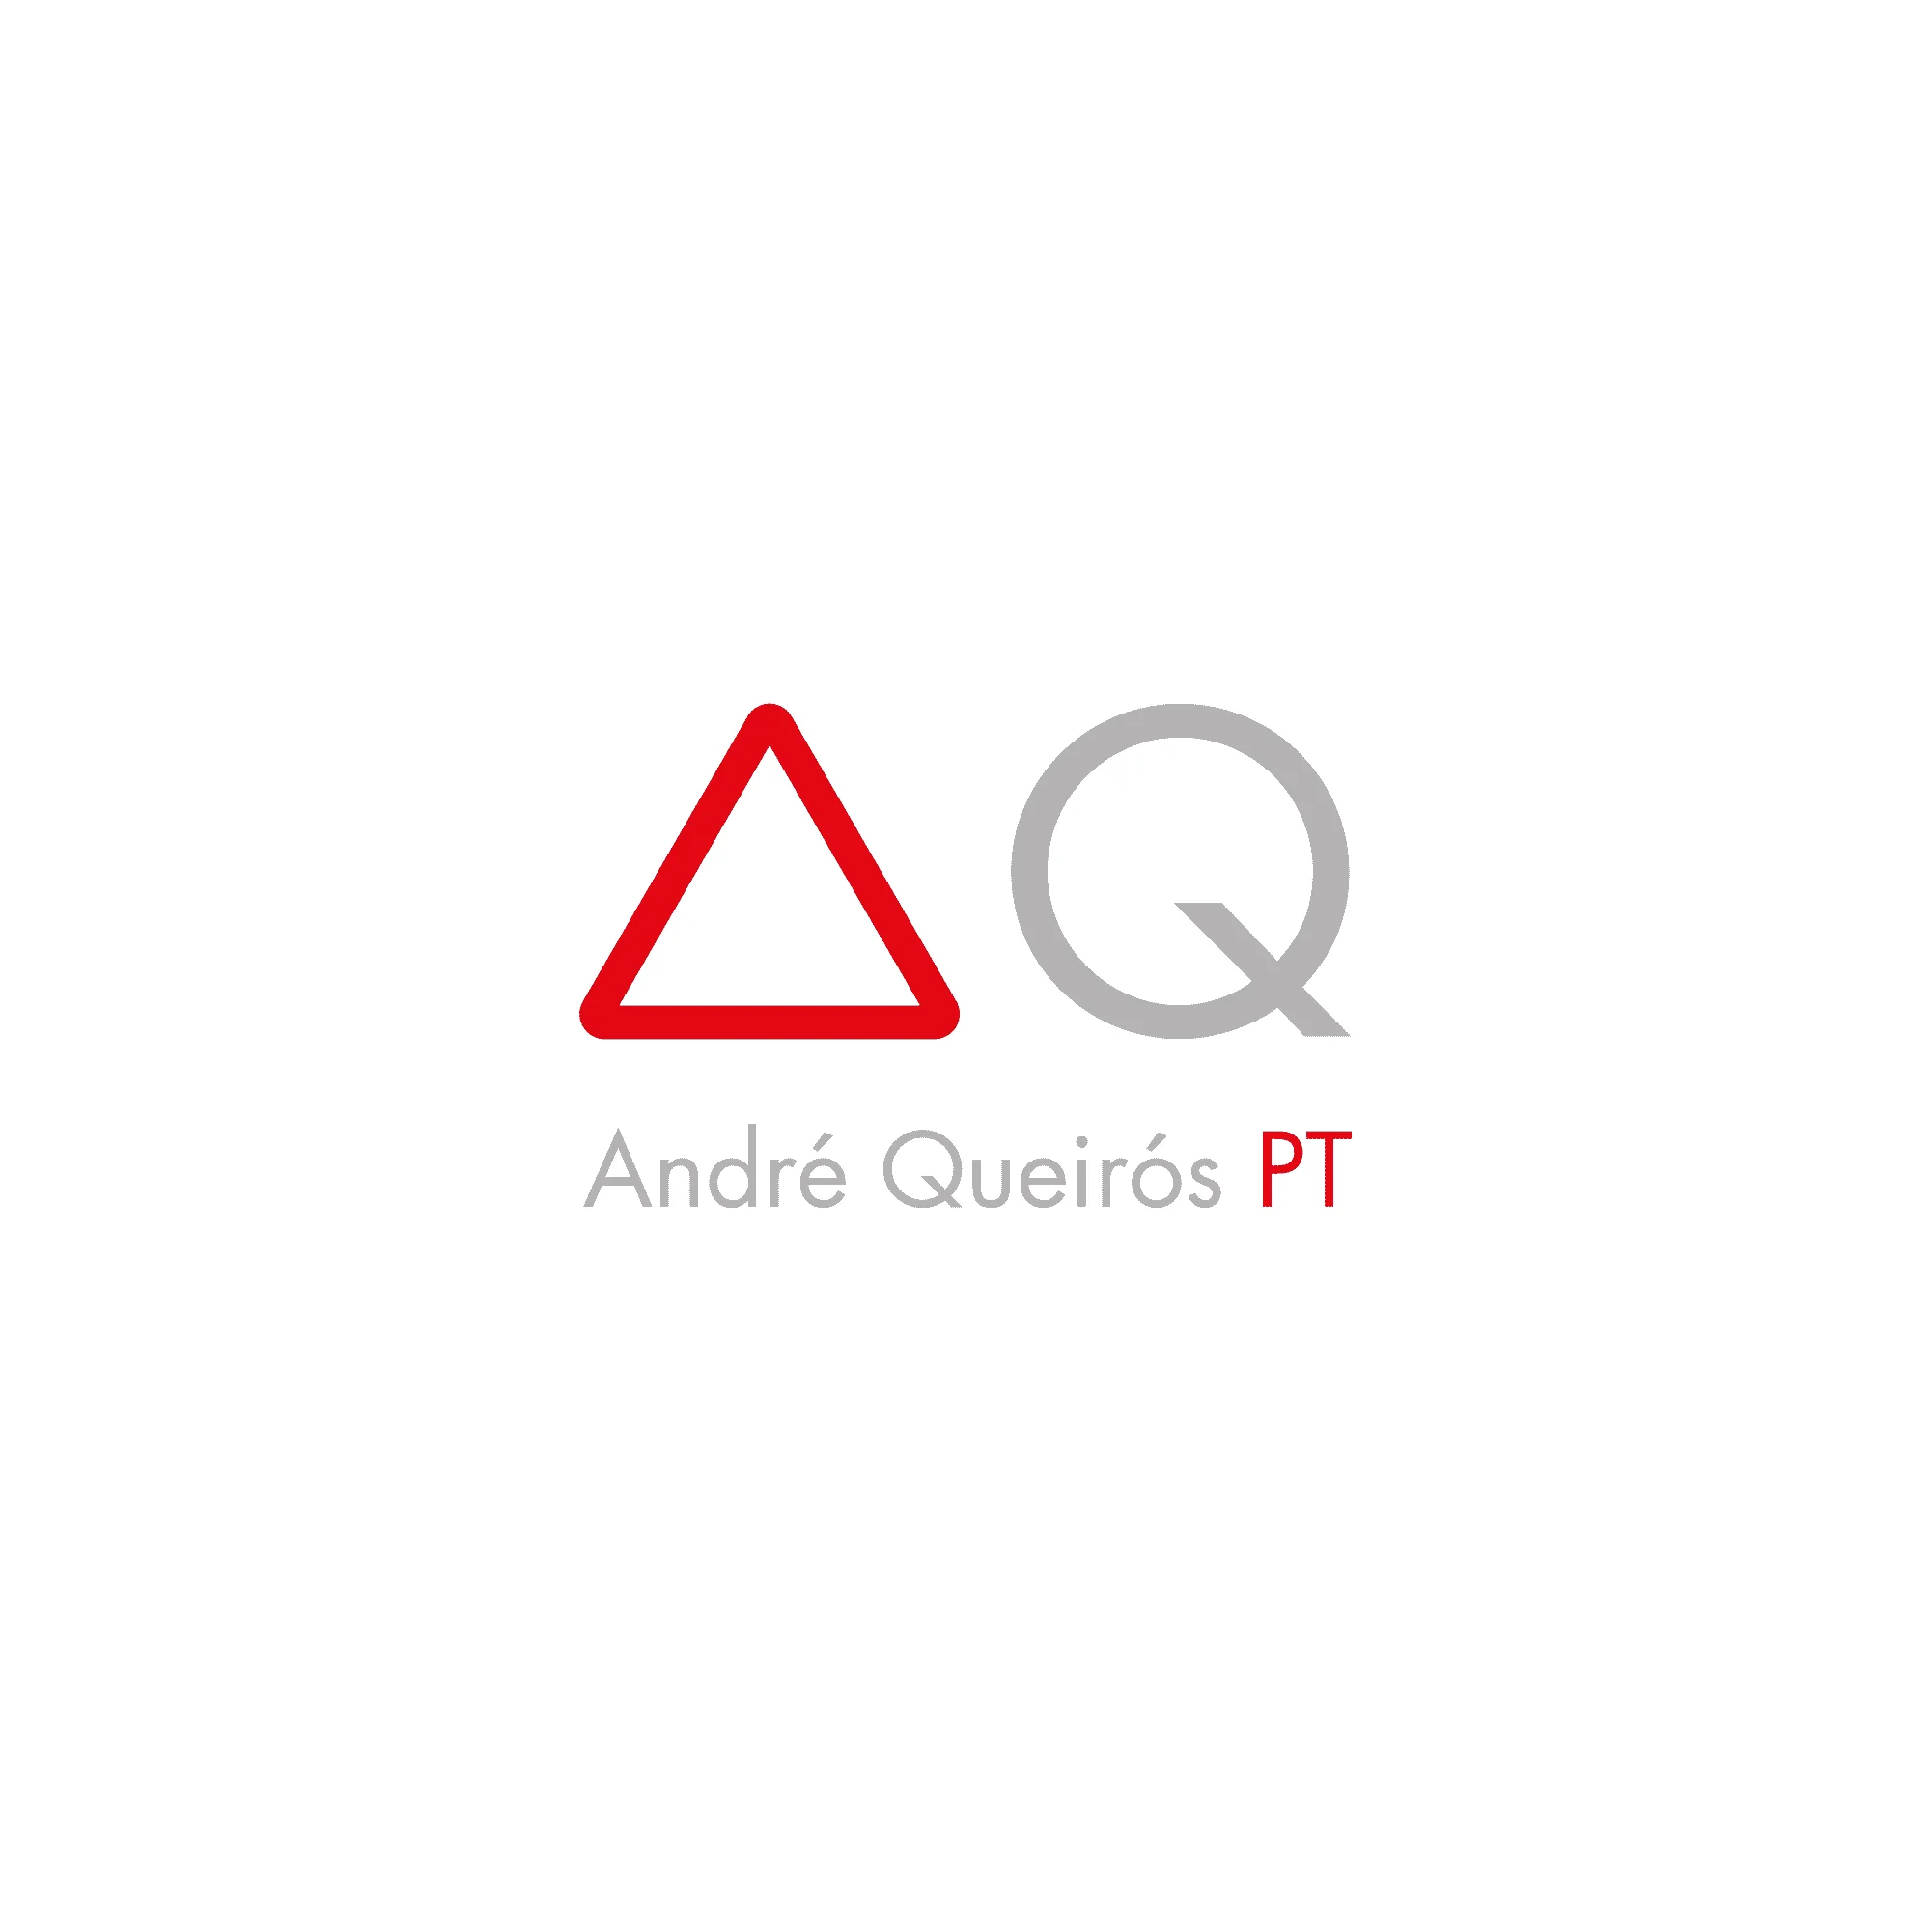 Branding logo design, triangle and letter "Q"